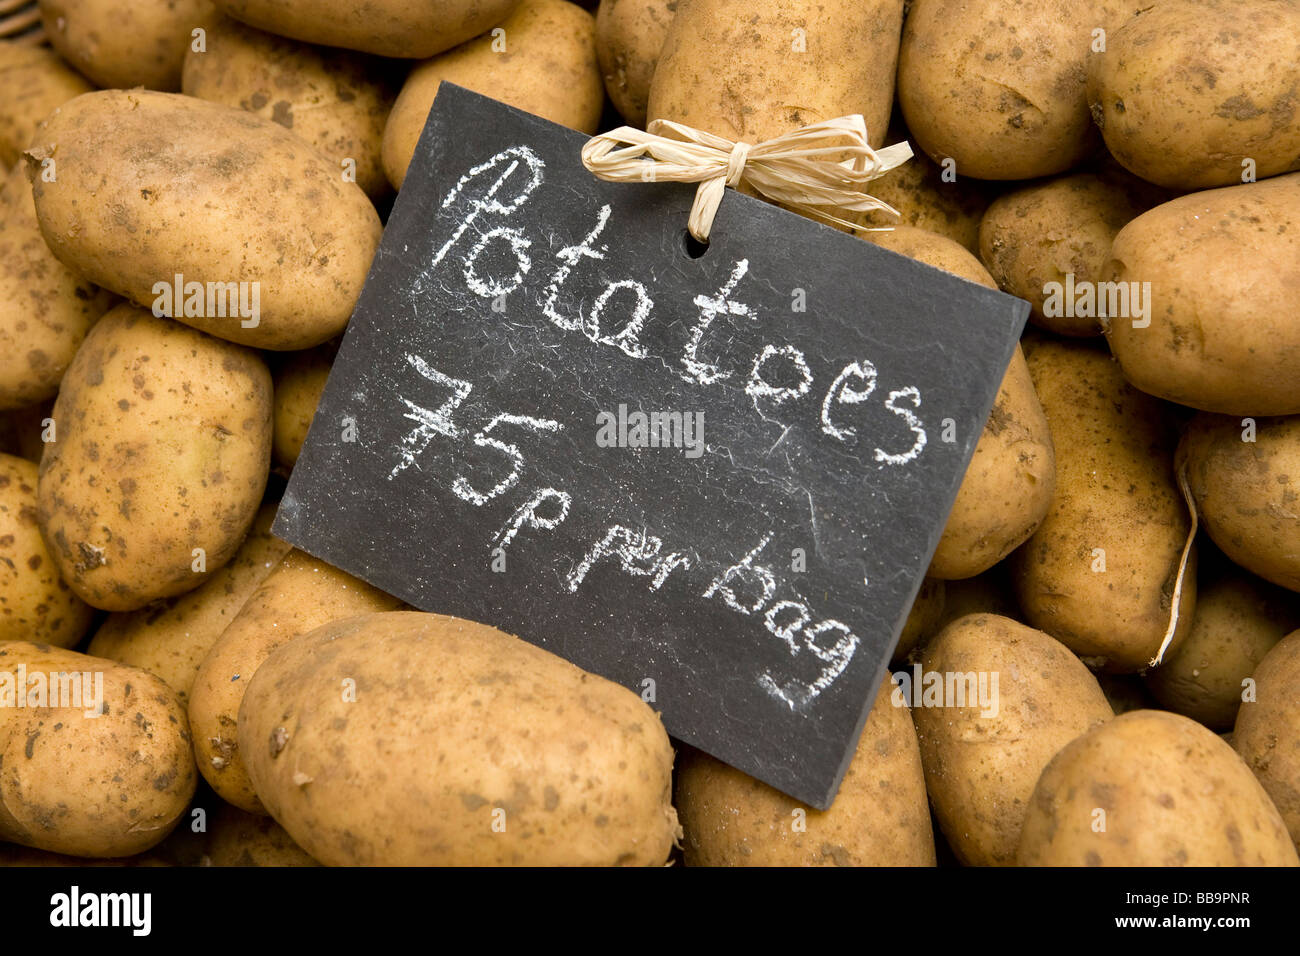 The Benefits of Potato Bags - Bag of Potatoes